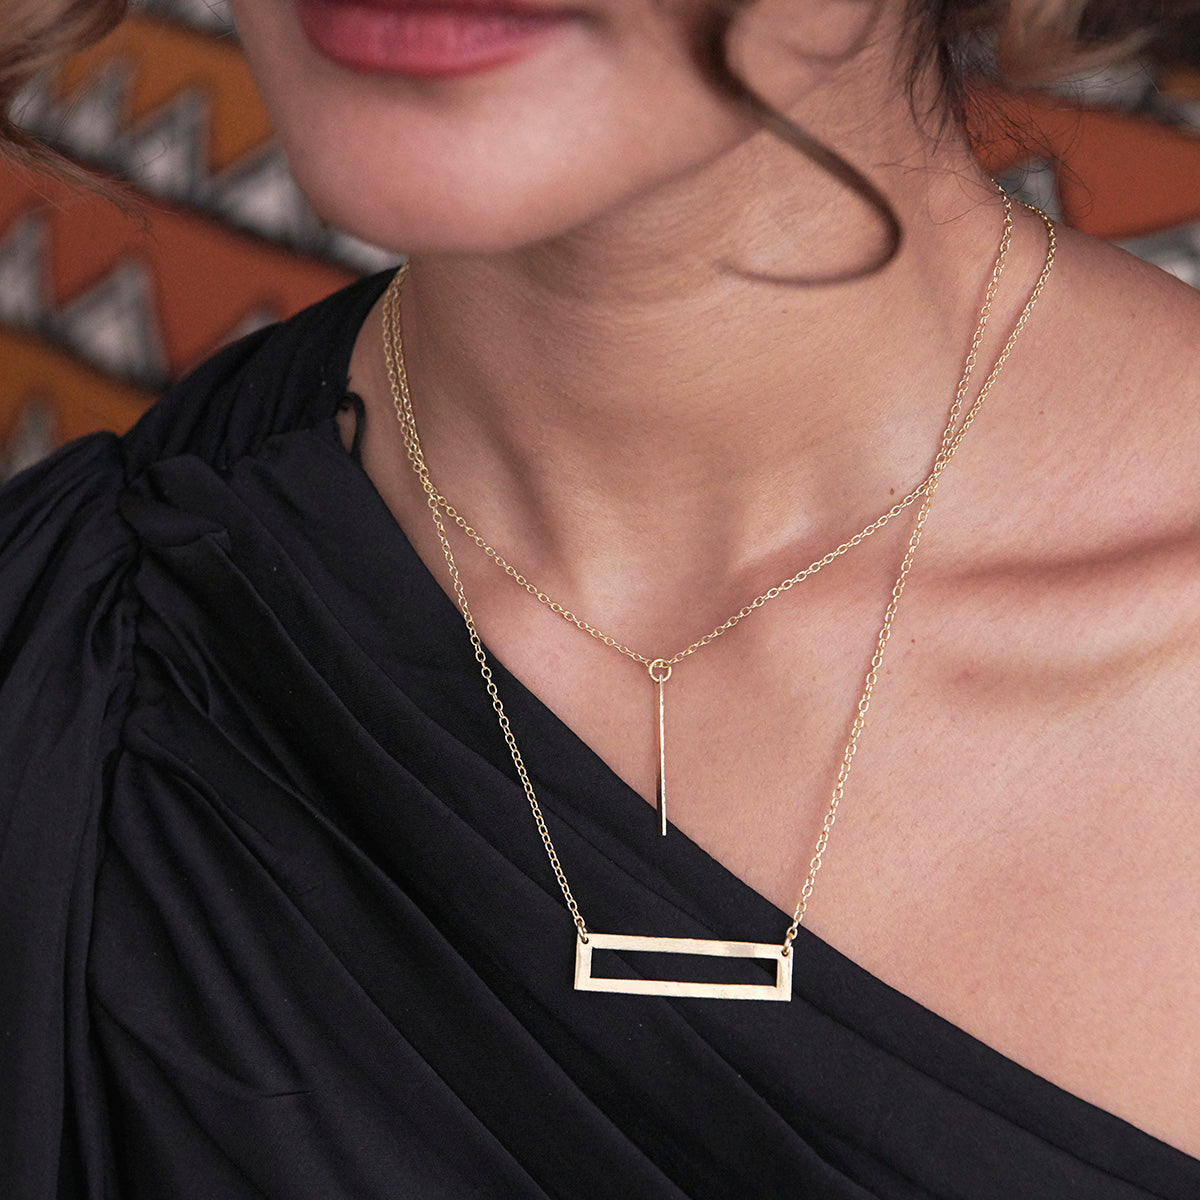 A model wears the Cutout Rectangle Pendant Necklace.